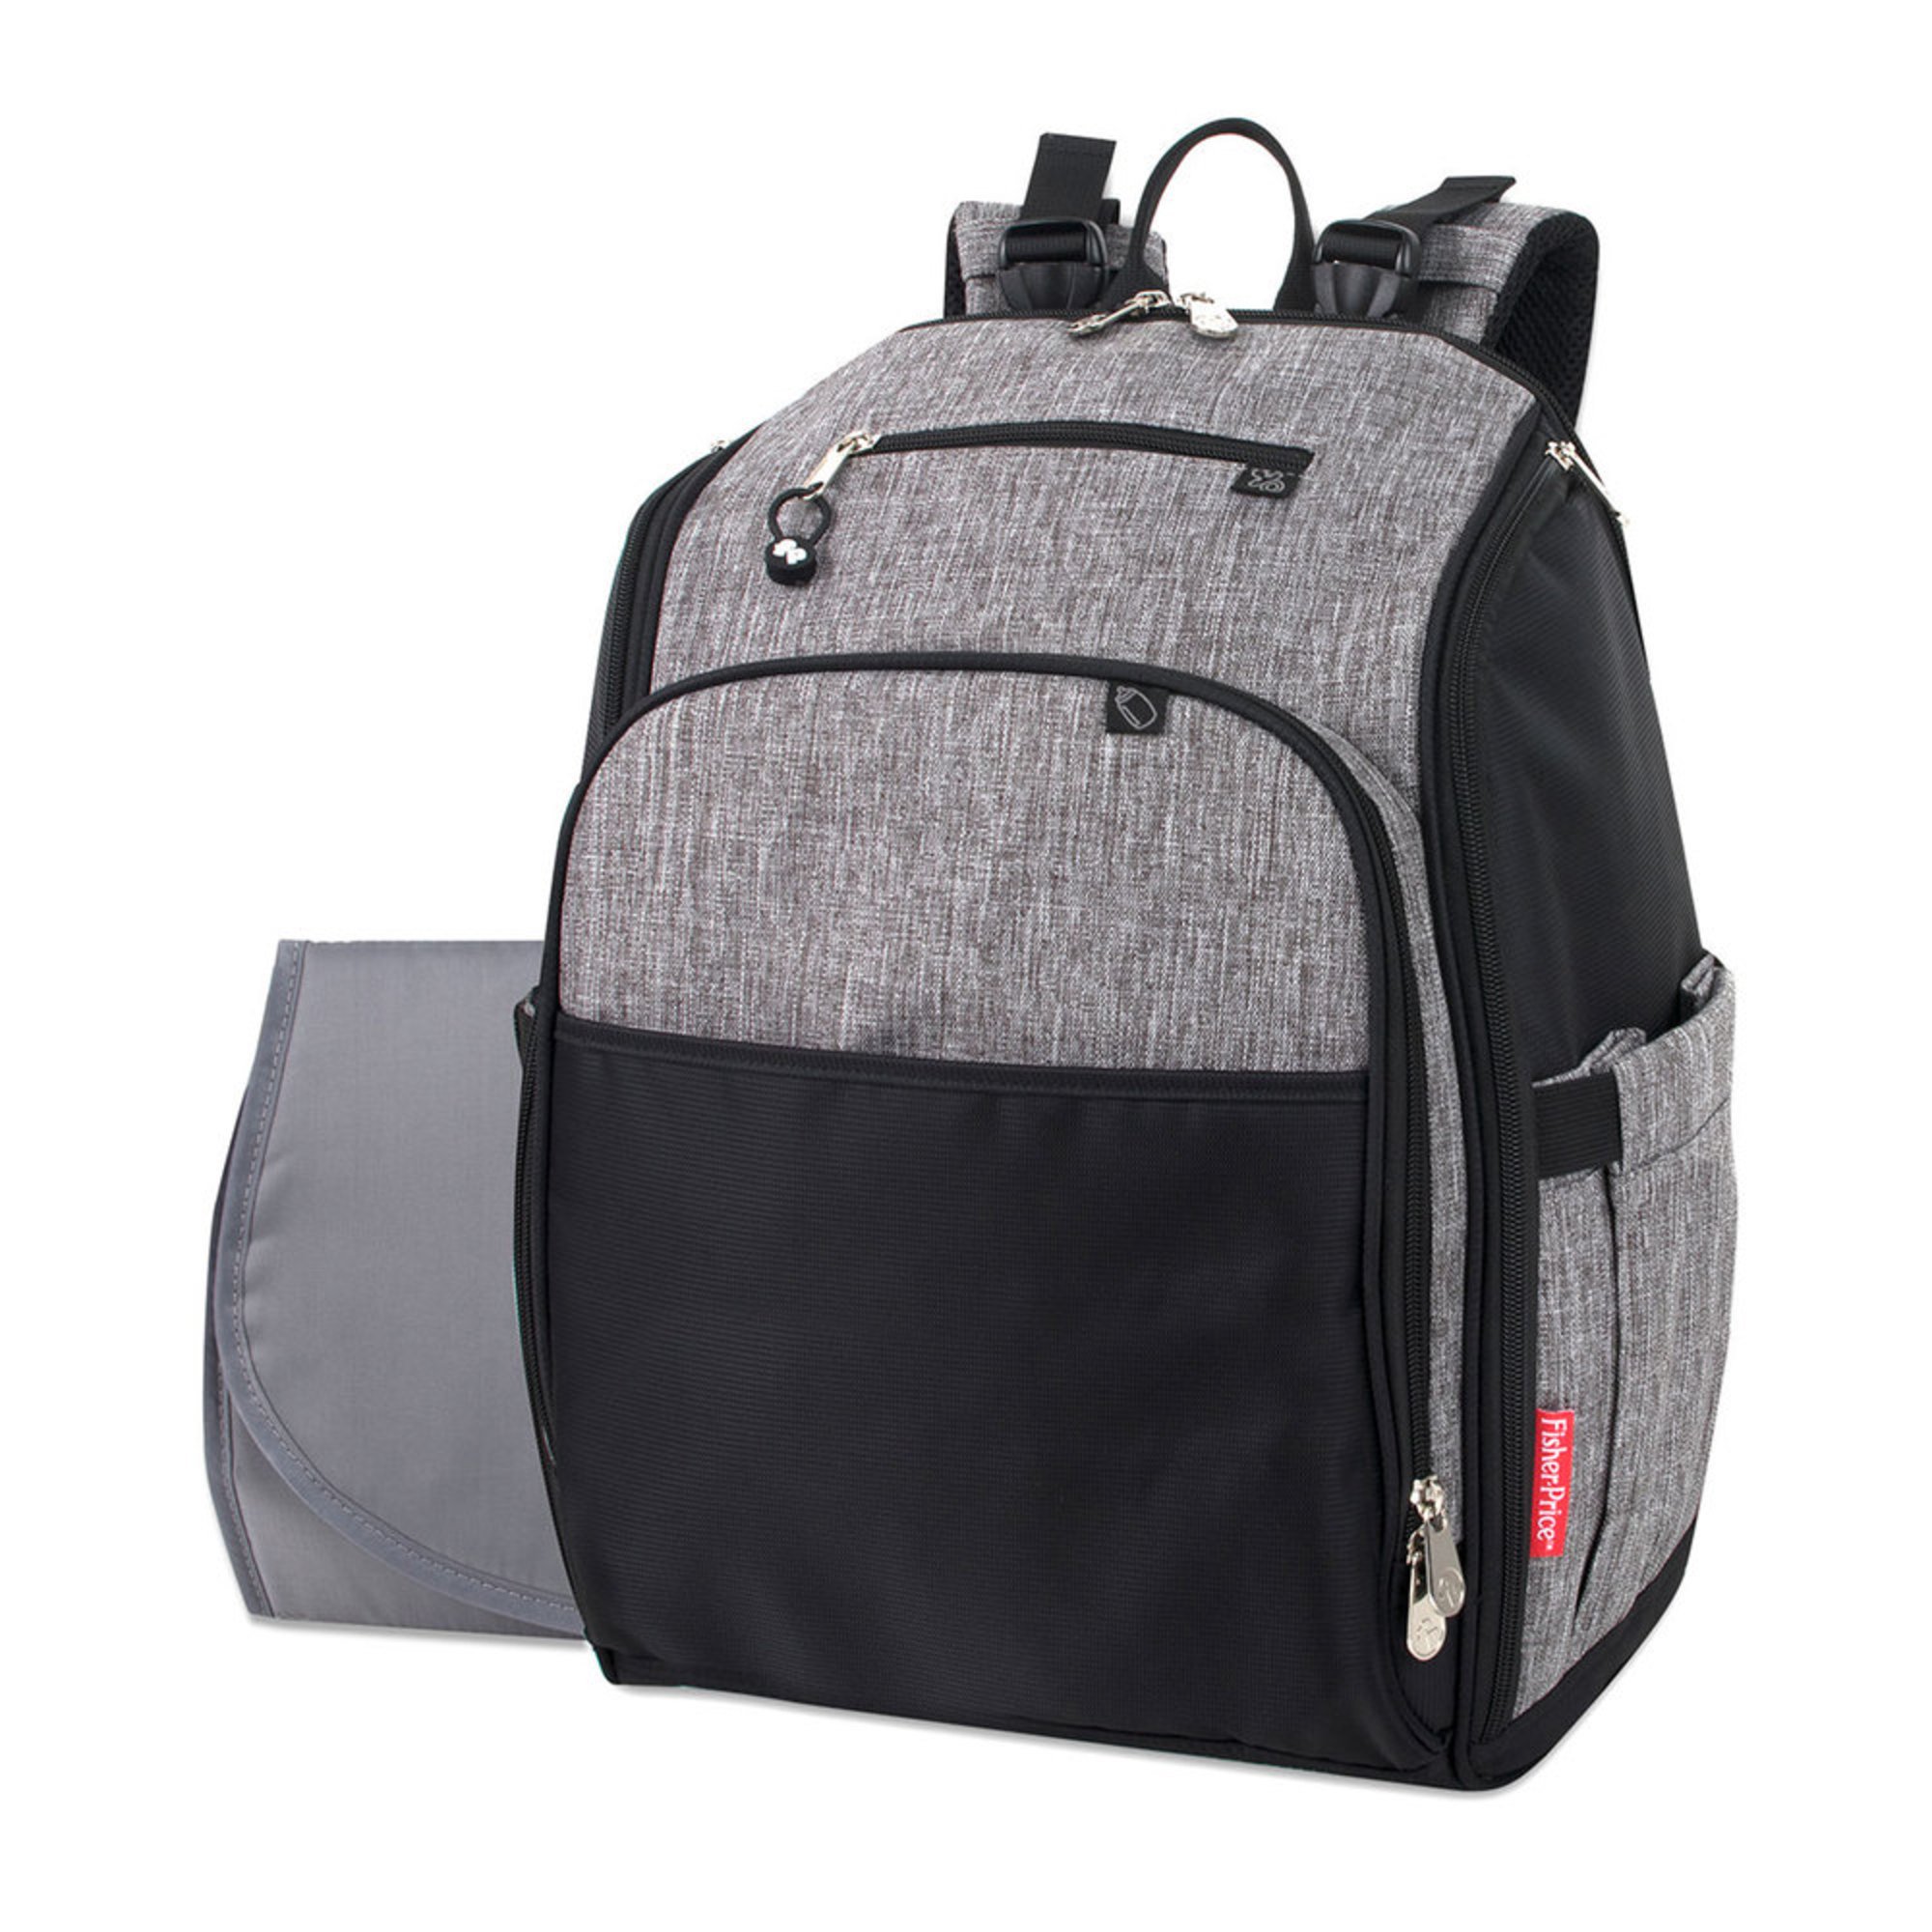 Fisher-price Kaden Backpack Diaper Bag | Backpacks | Baby, Kids & Toys - Shop Your Navy Exchange ...